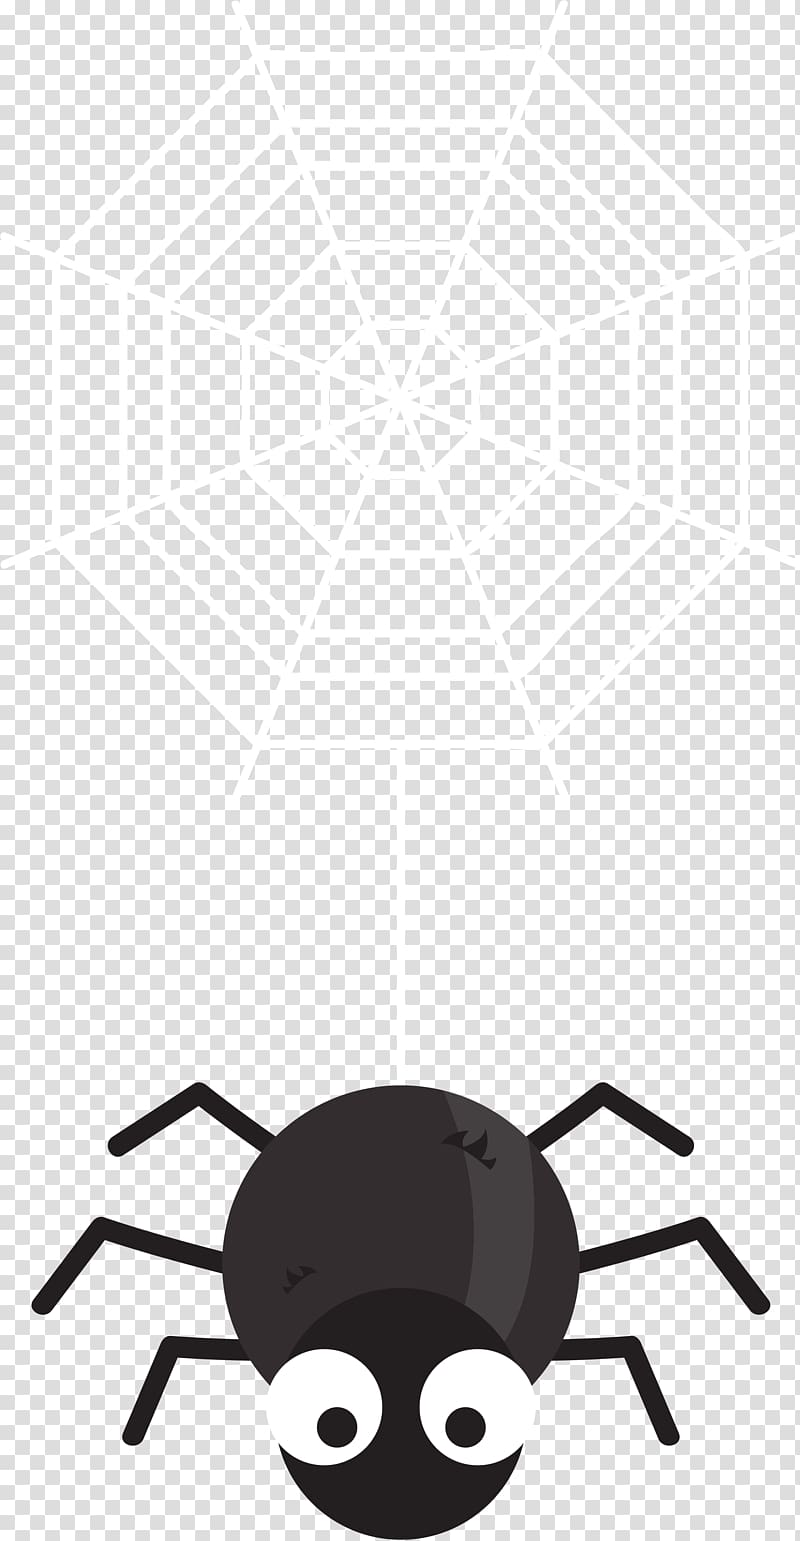 Spider web Black house spider, Cartoon Black Witch Hat transparent background PNG clipart